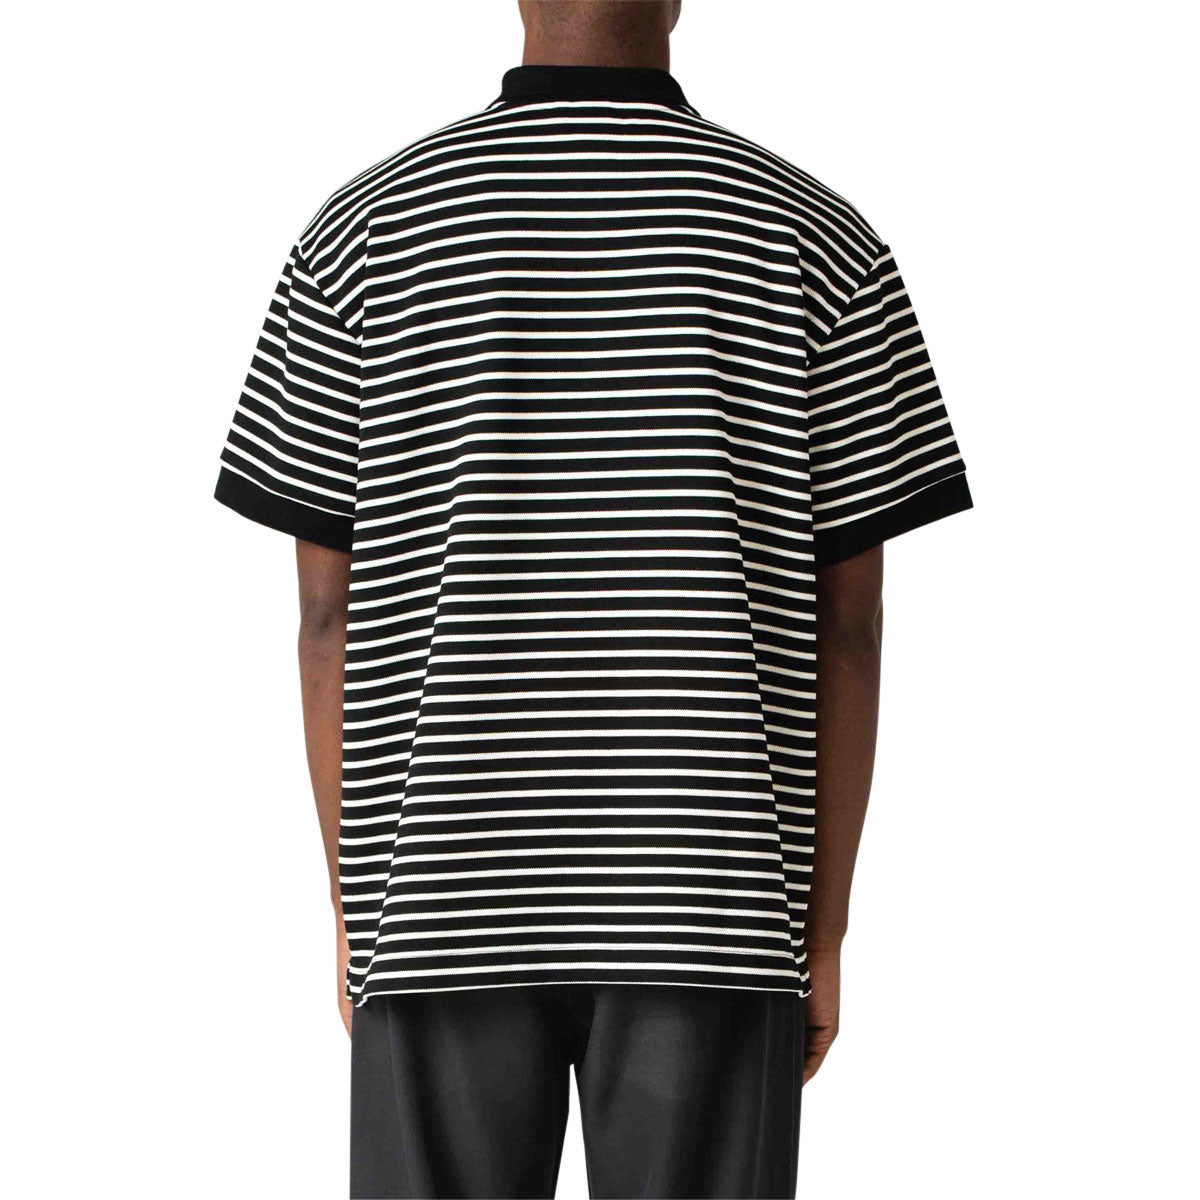 Former Uniform Striped Polo Shirt - Worn Black/White image 2